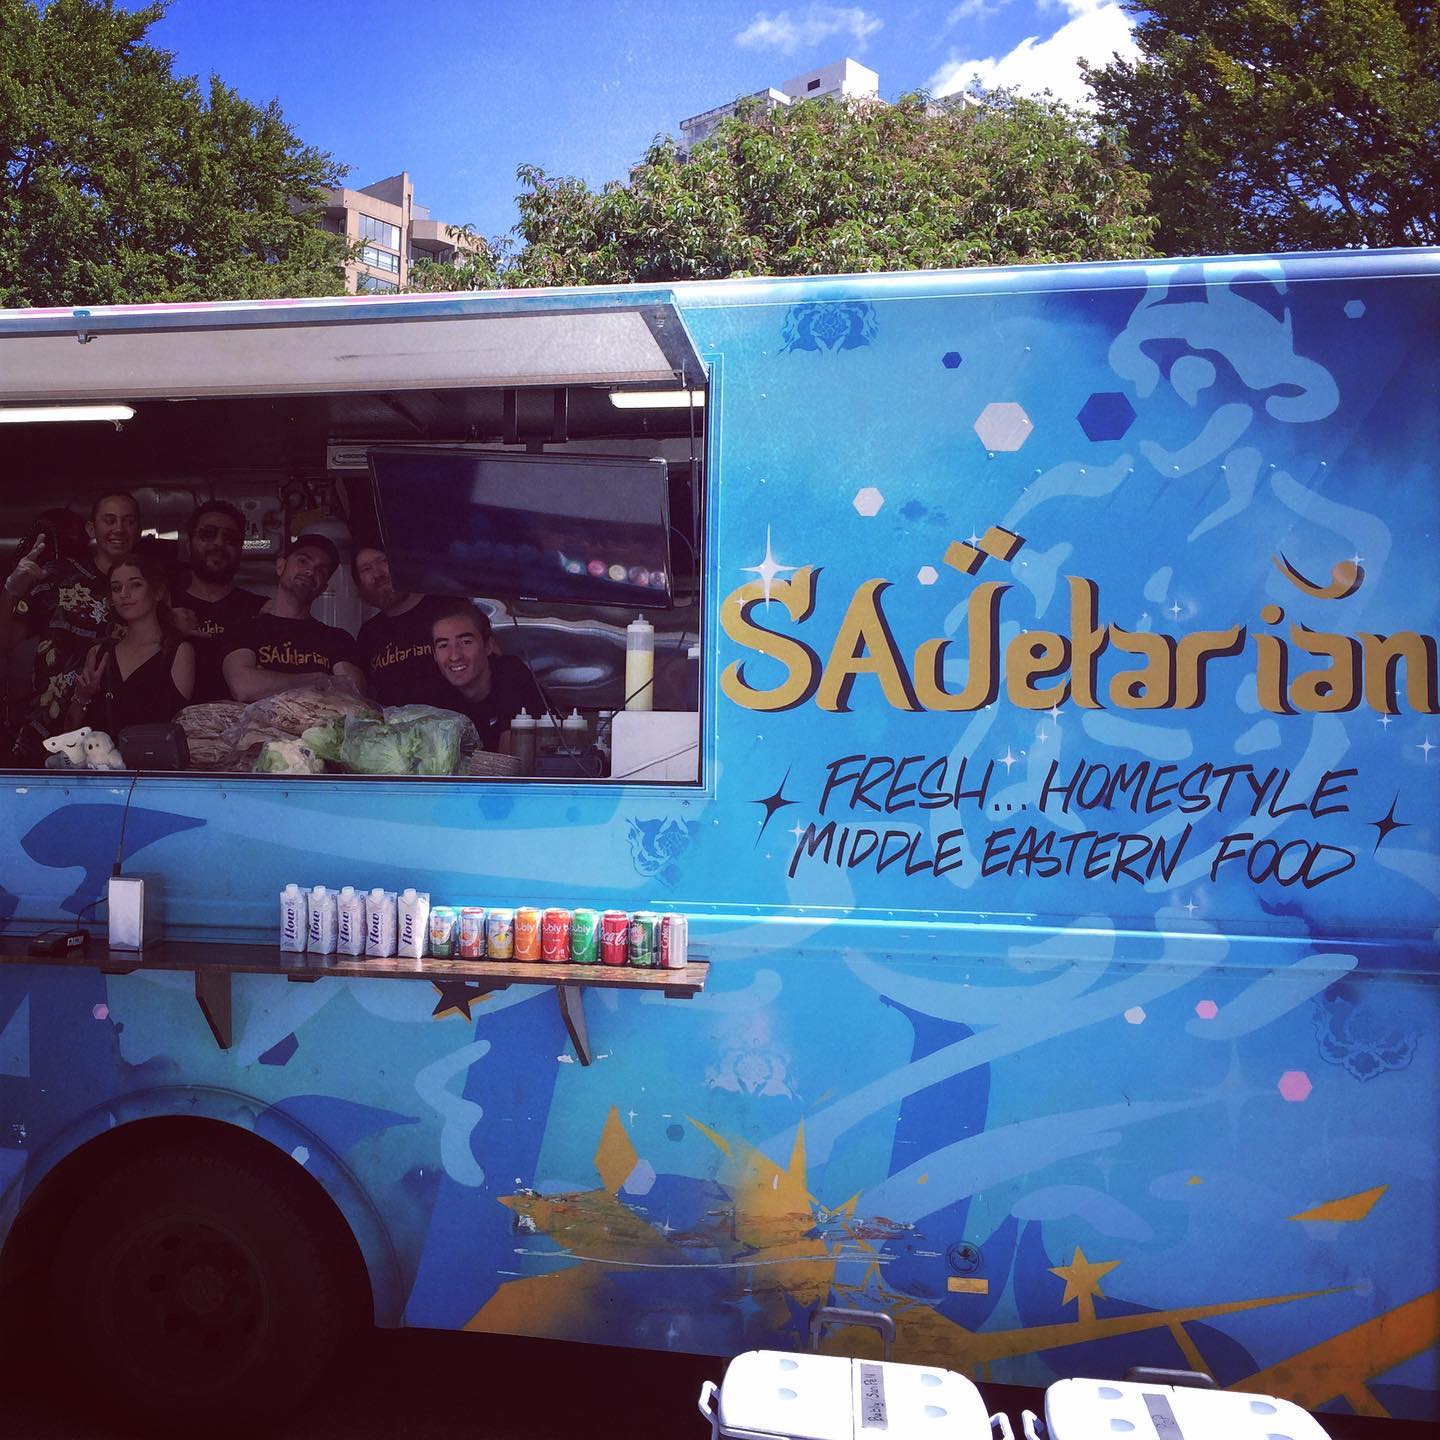 sajetarian food truck